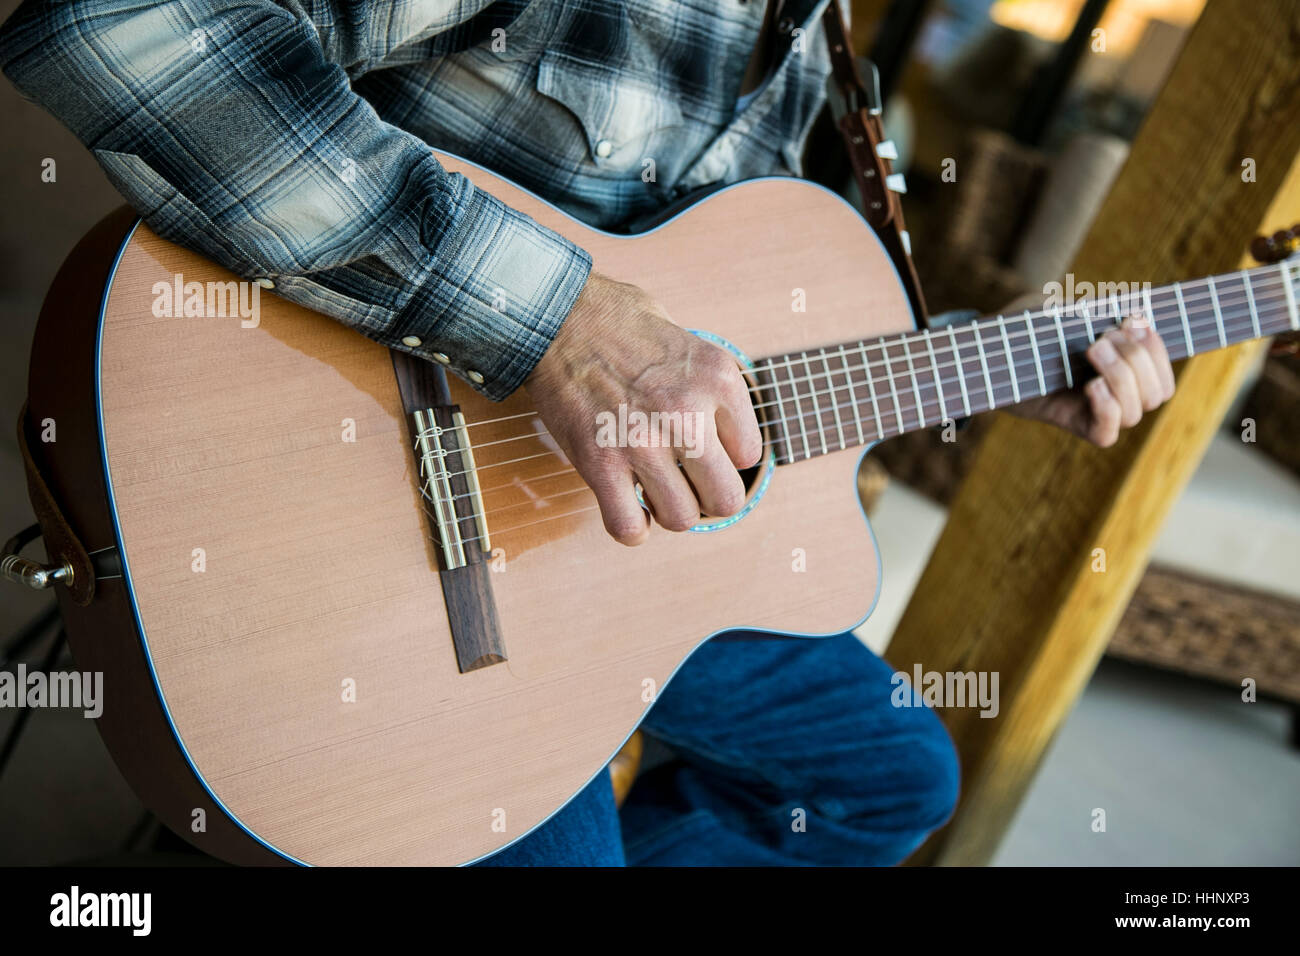 Man playing guitar Stock Photo